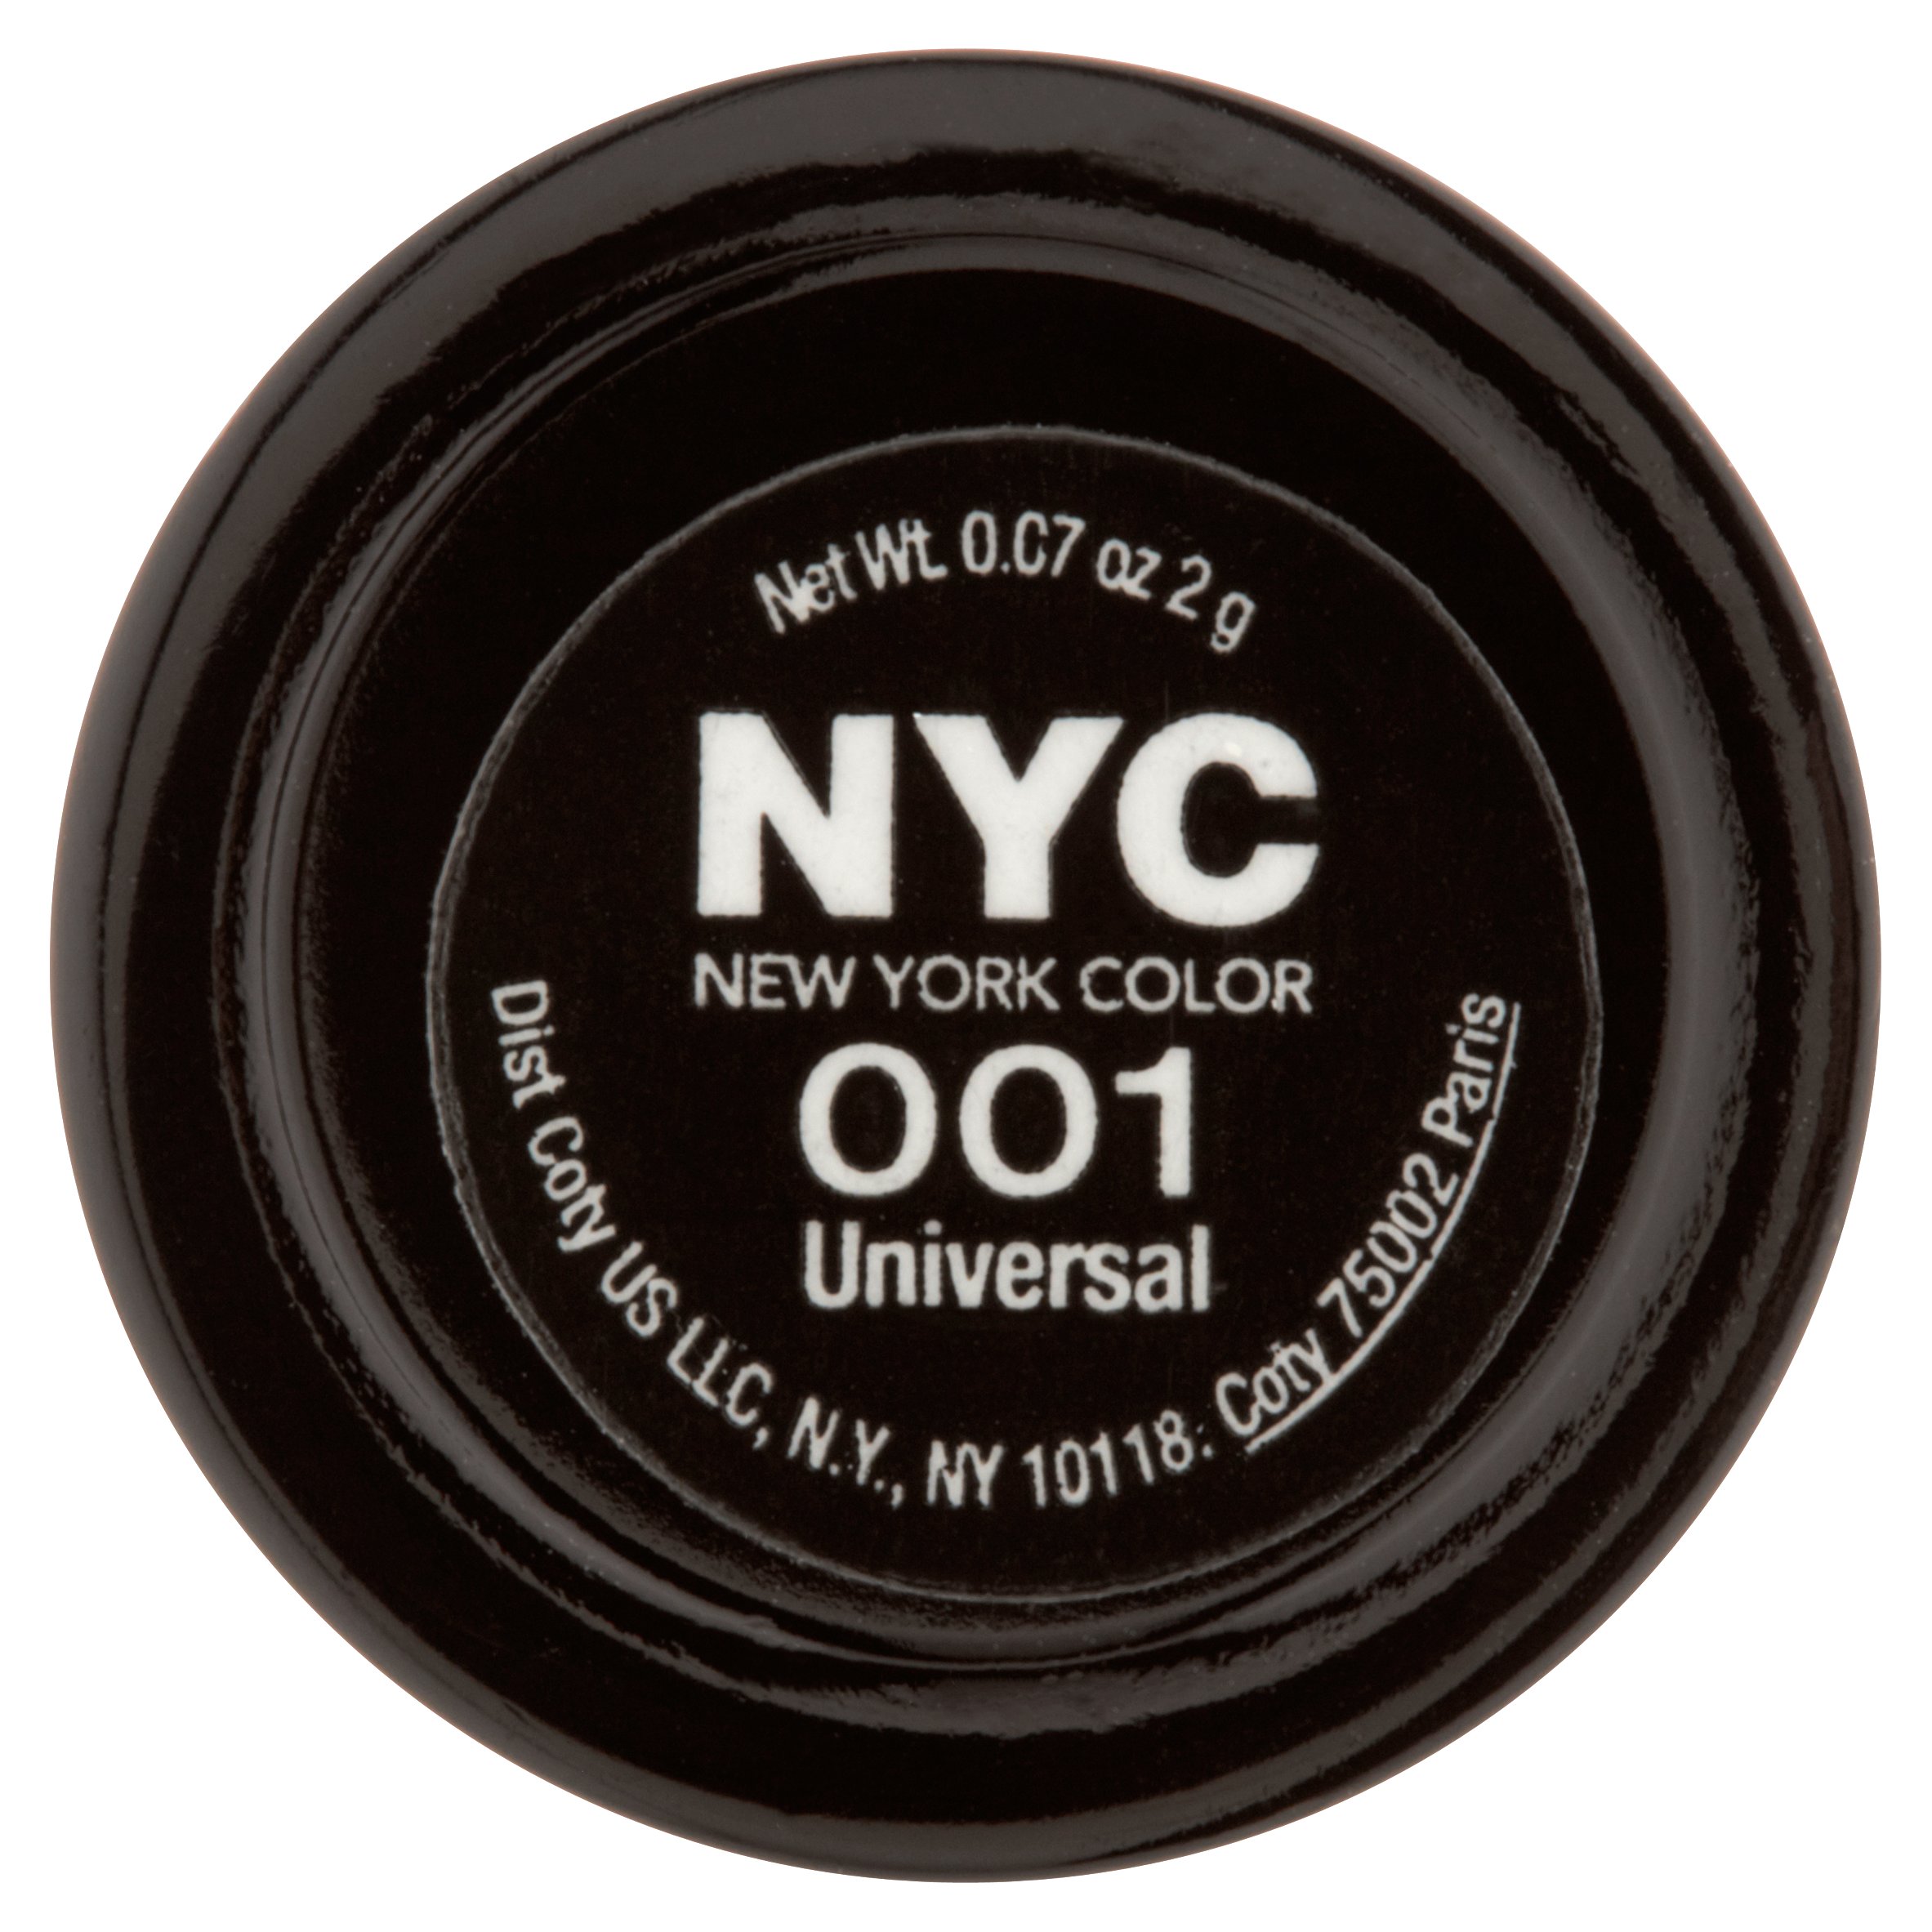 N.y.c. new york color city proof eye shadow primer, 0.07 oz - image 4 of 4